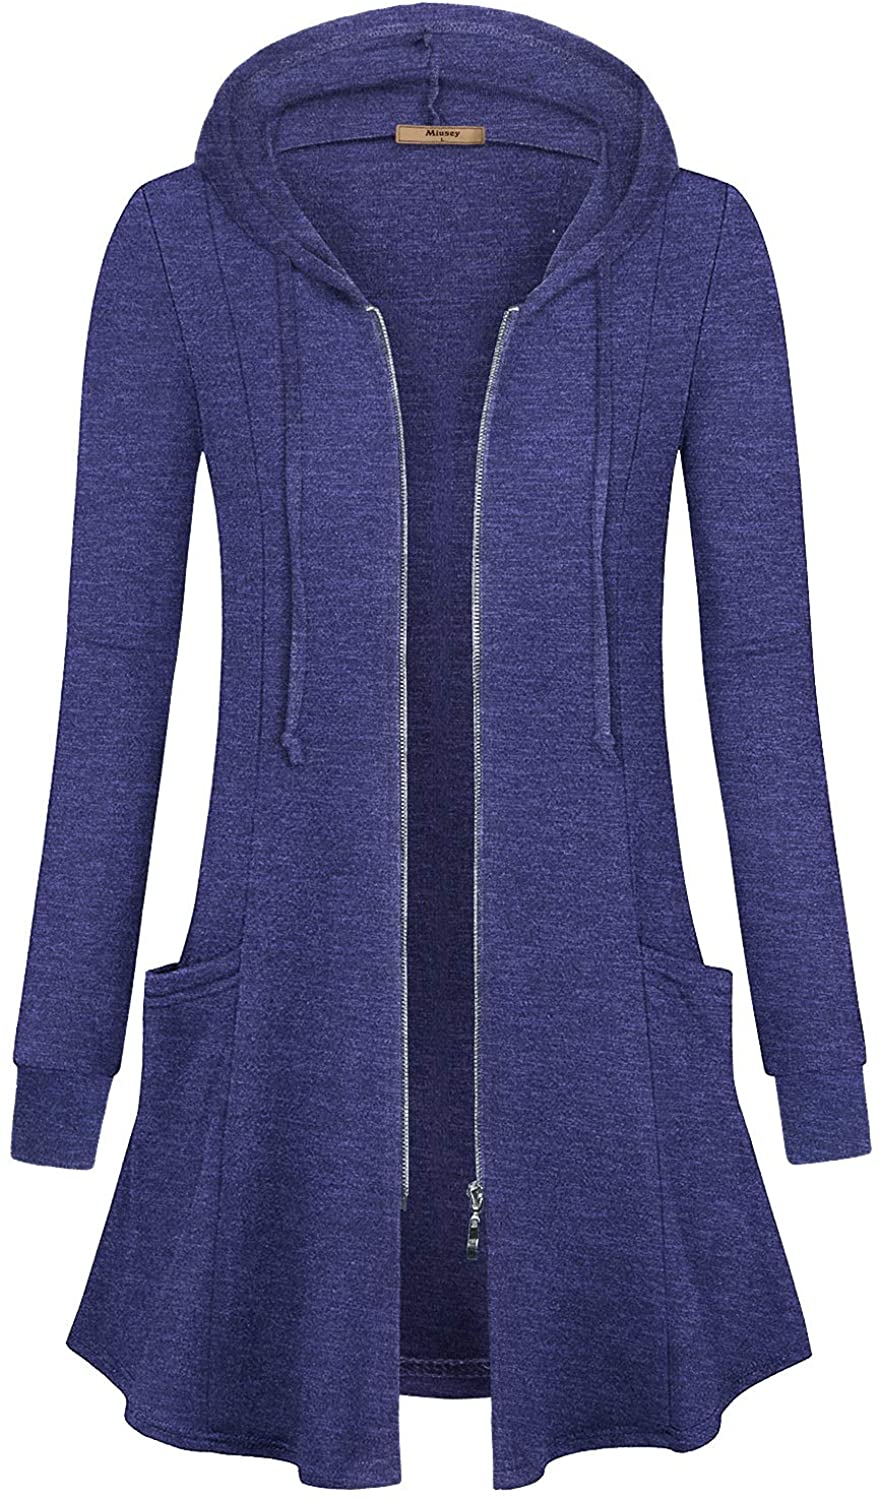 M~2X Miusey Womens Open Front Cardigan Hoodies Contemporary Sweatshirt Size 